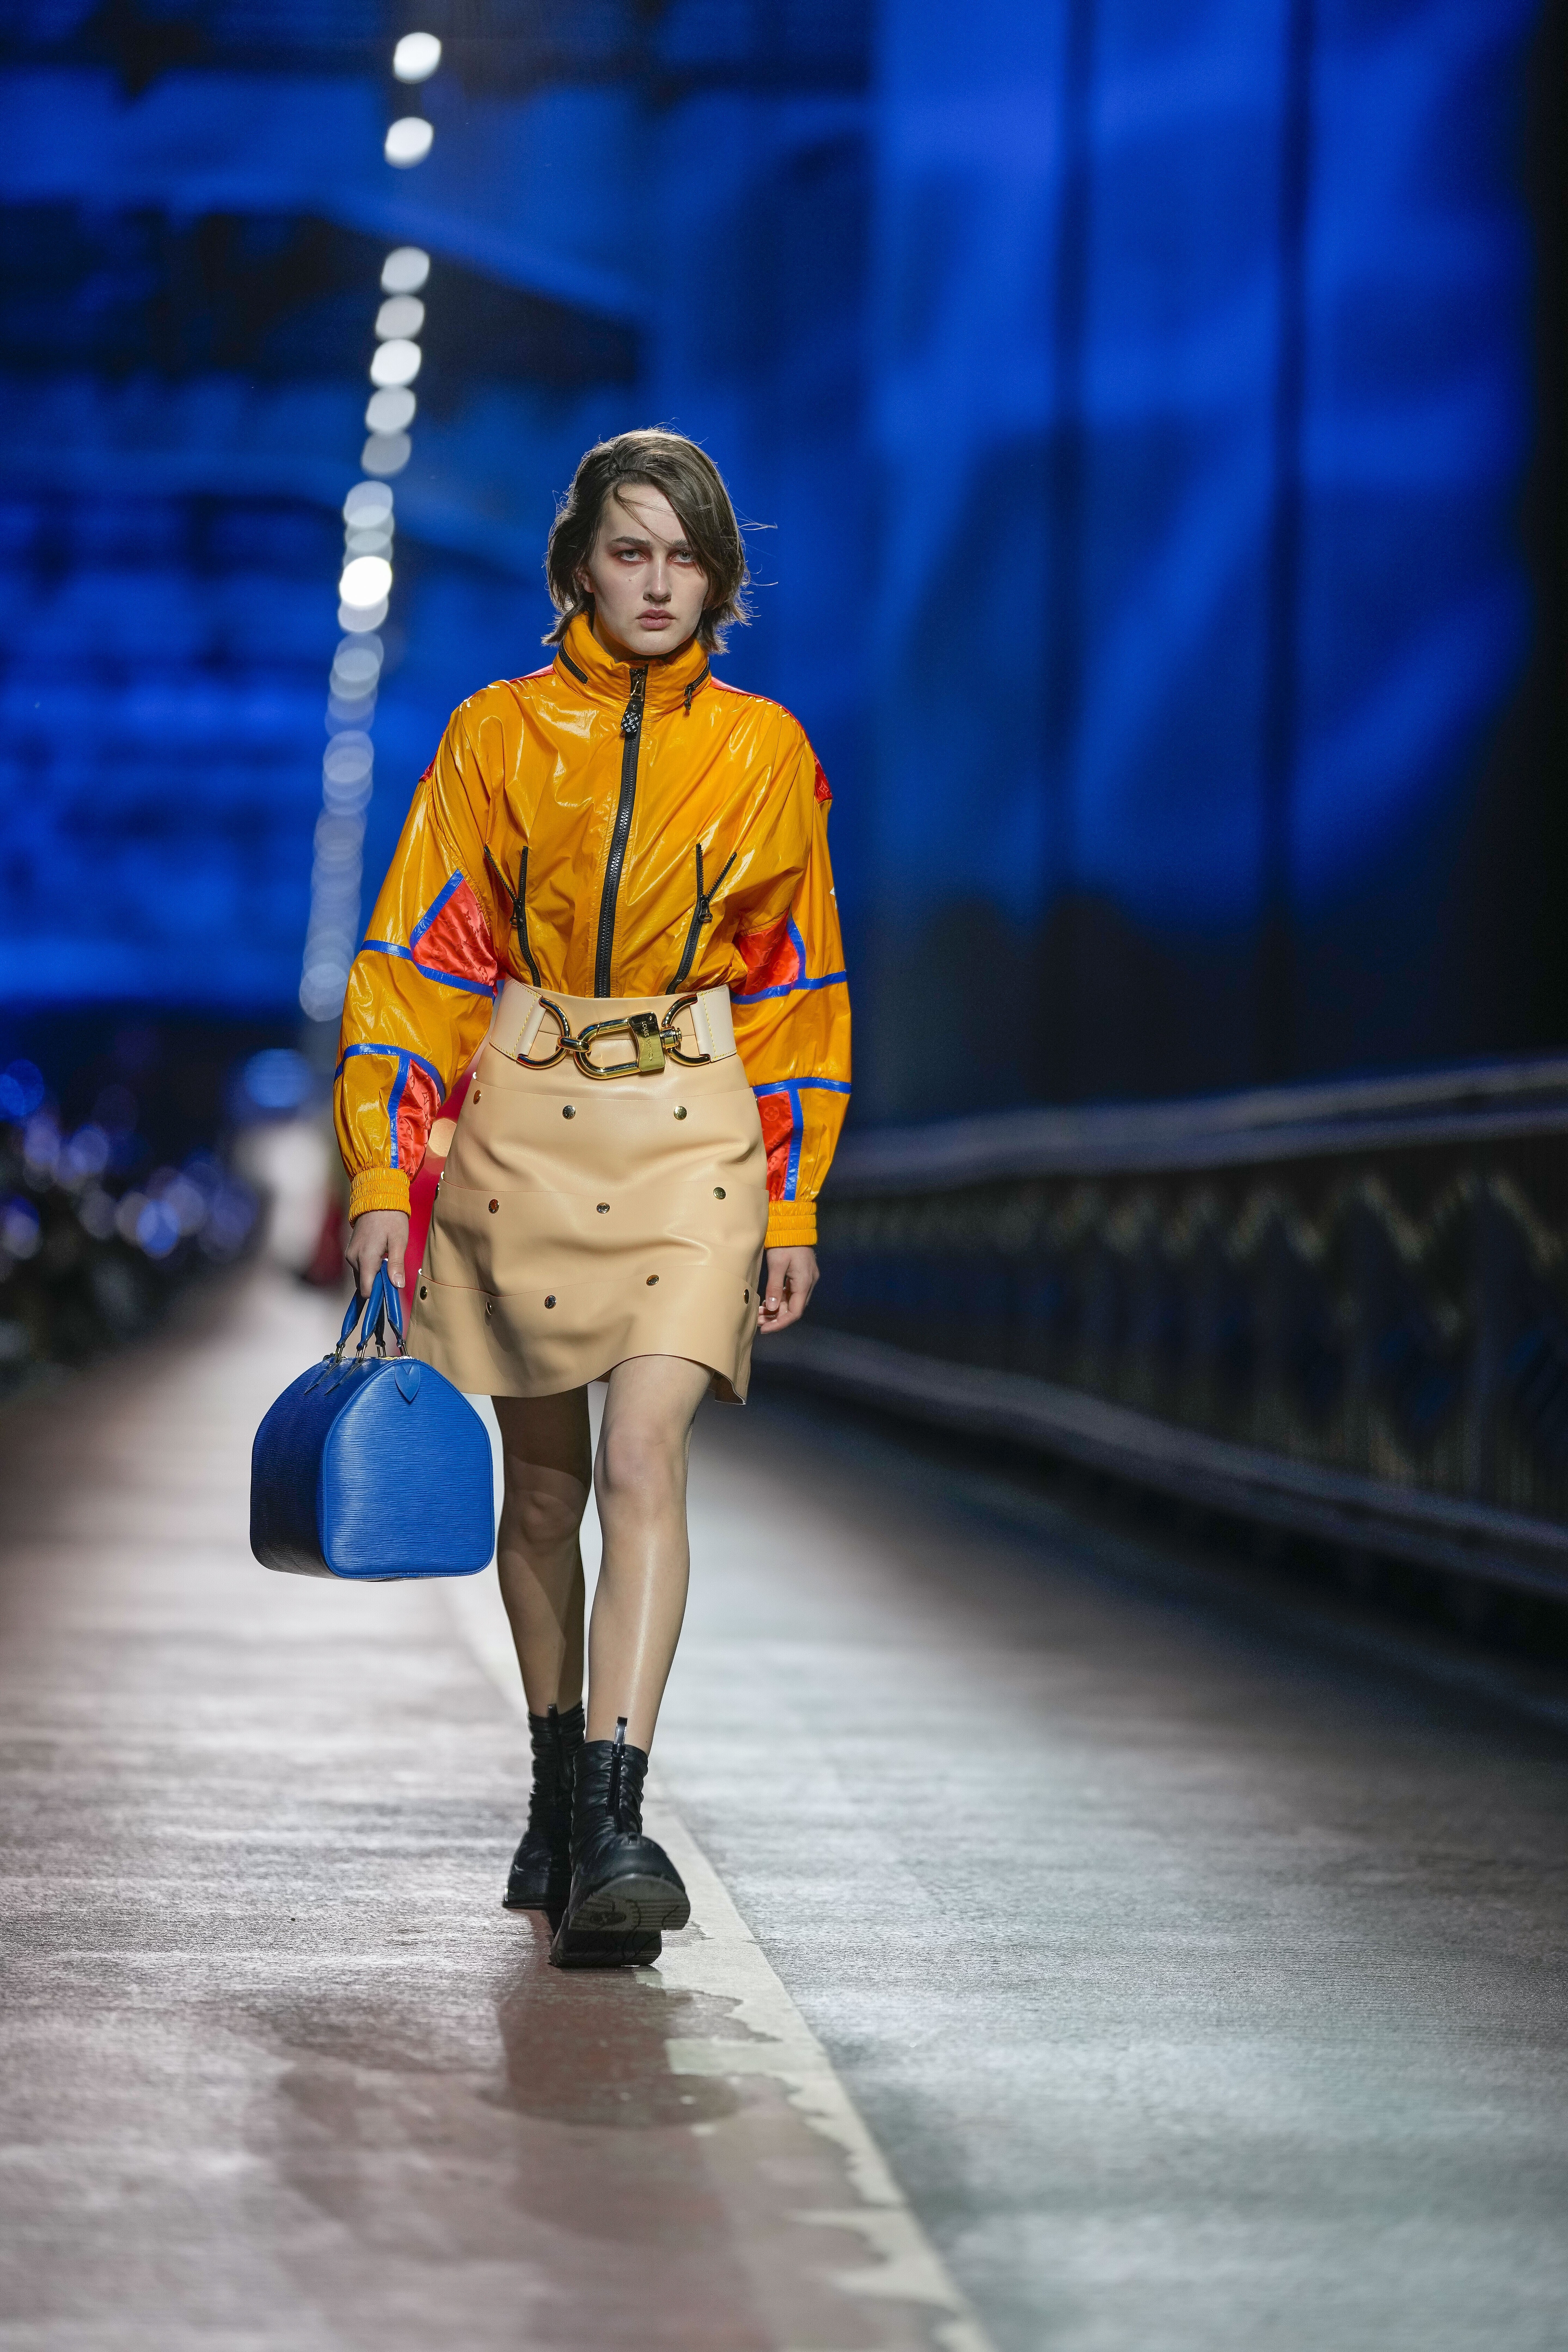 Jaden Smith becomes face of Louis Vuitton womenswear